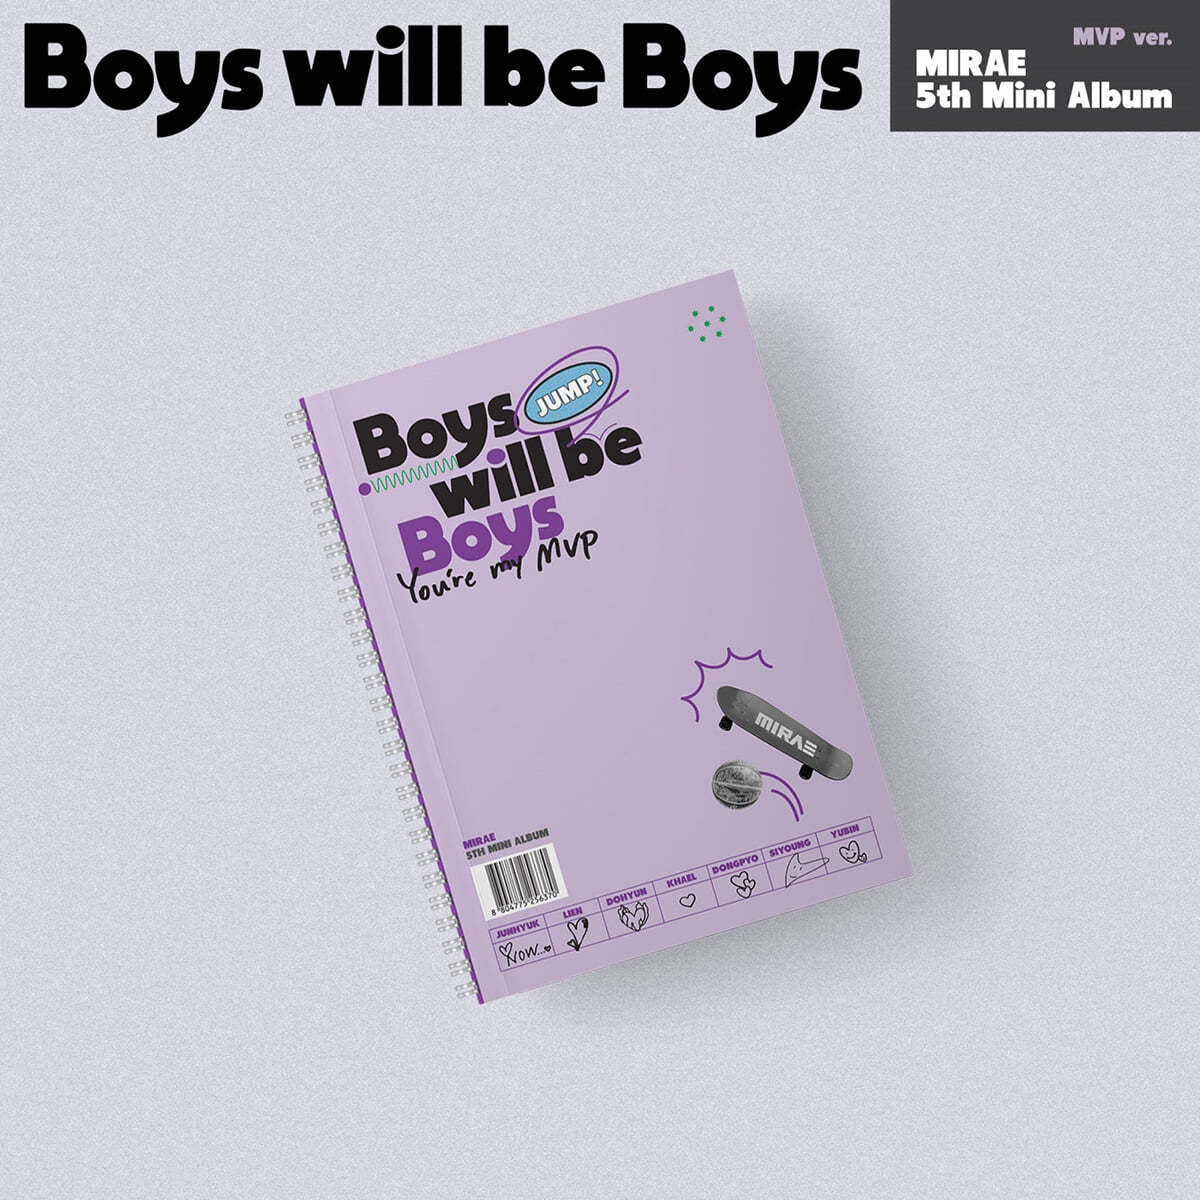 MIRAE 5th Mini Album : Boys will be Boys